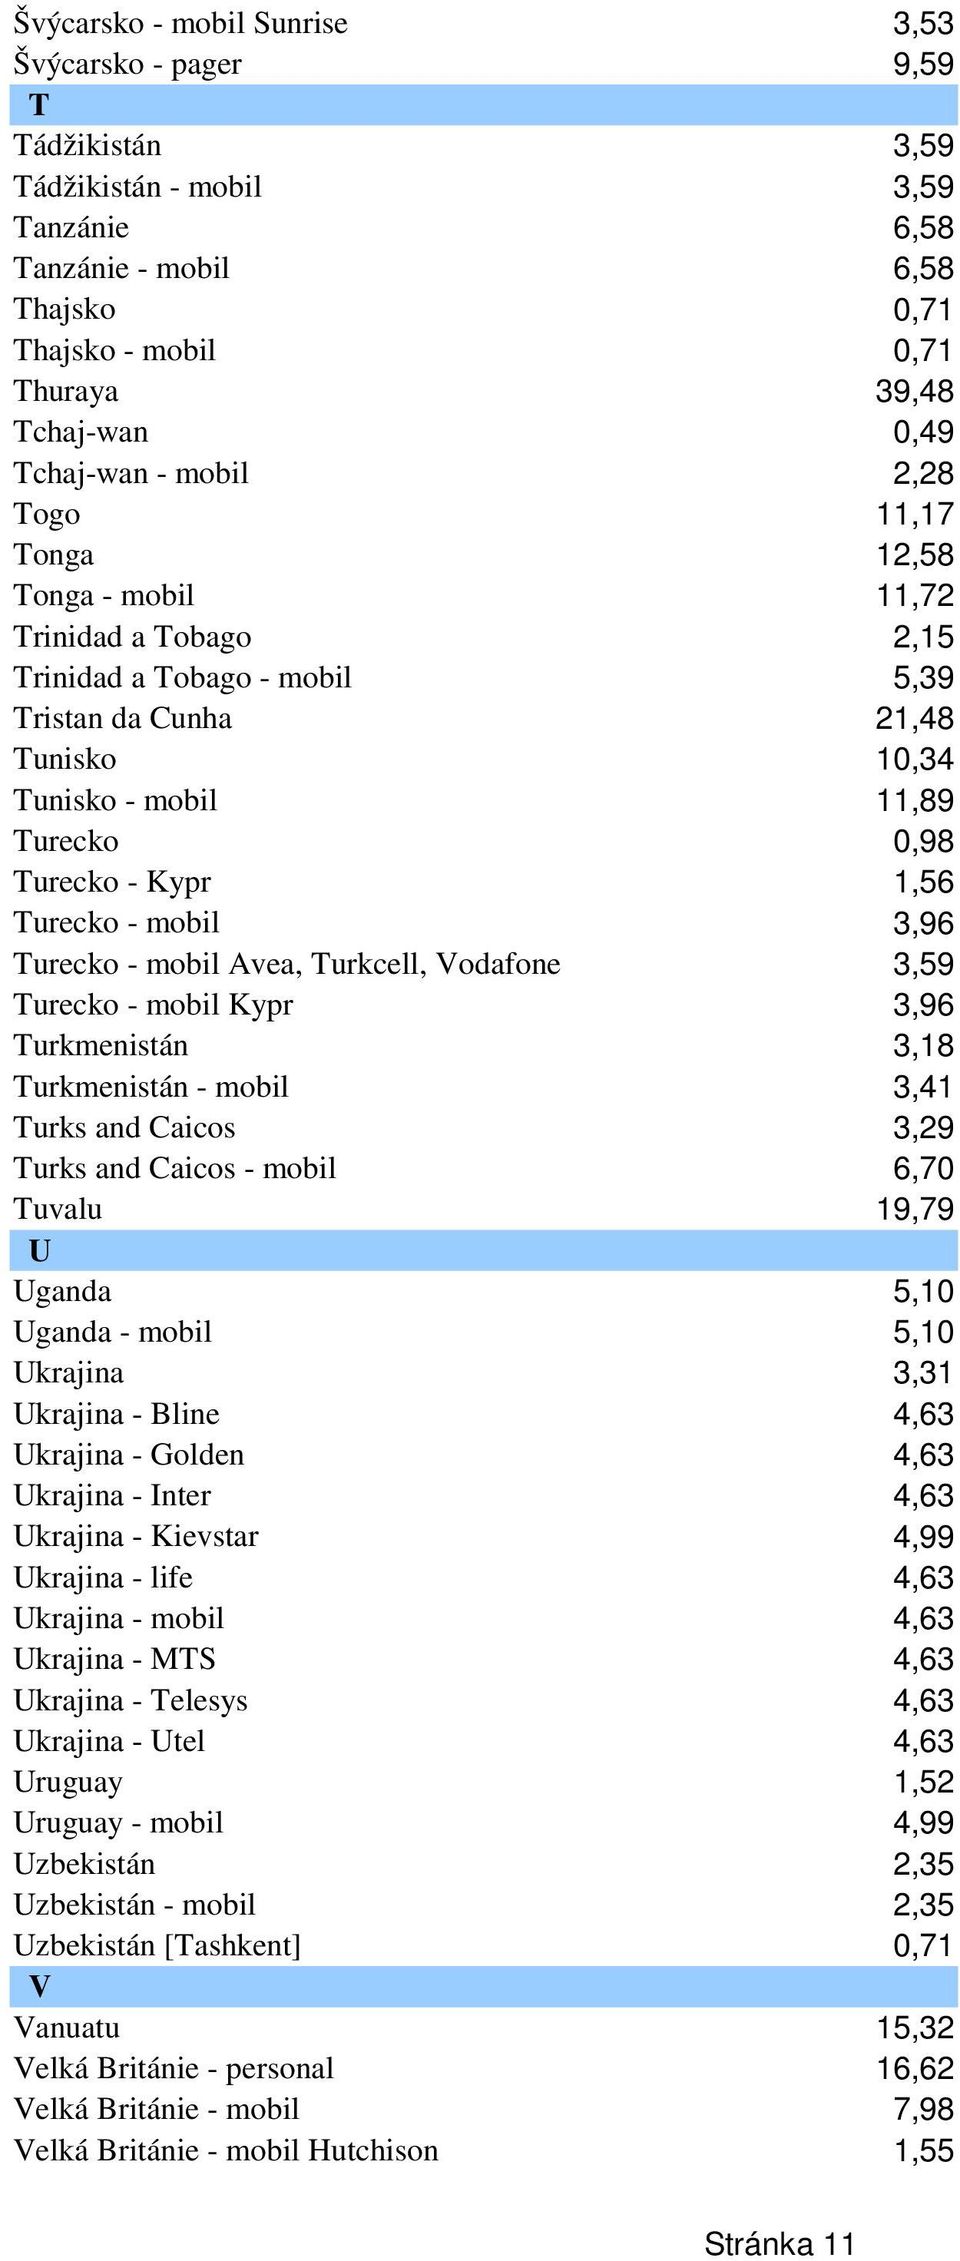 - Kypr 1,56 Turecko - mobil 3,96 Turecko - mobil Avea, Turkcell, Vodafone 3,59 Turecko - mobil Kypr 3,96 Turkmenistán 3,18 Turkmenistán - mobil 3,41 Turks and Caicos 3,29 Turks and Caicos - mobil